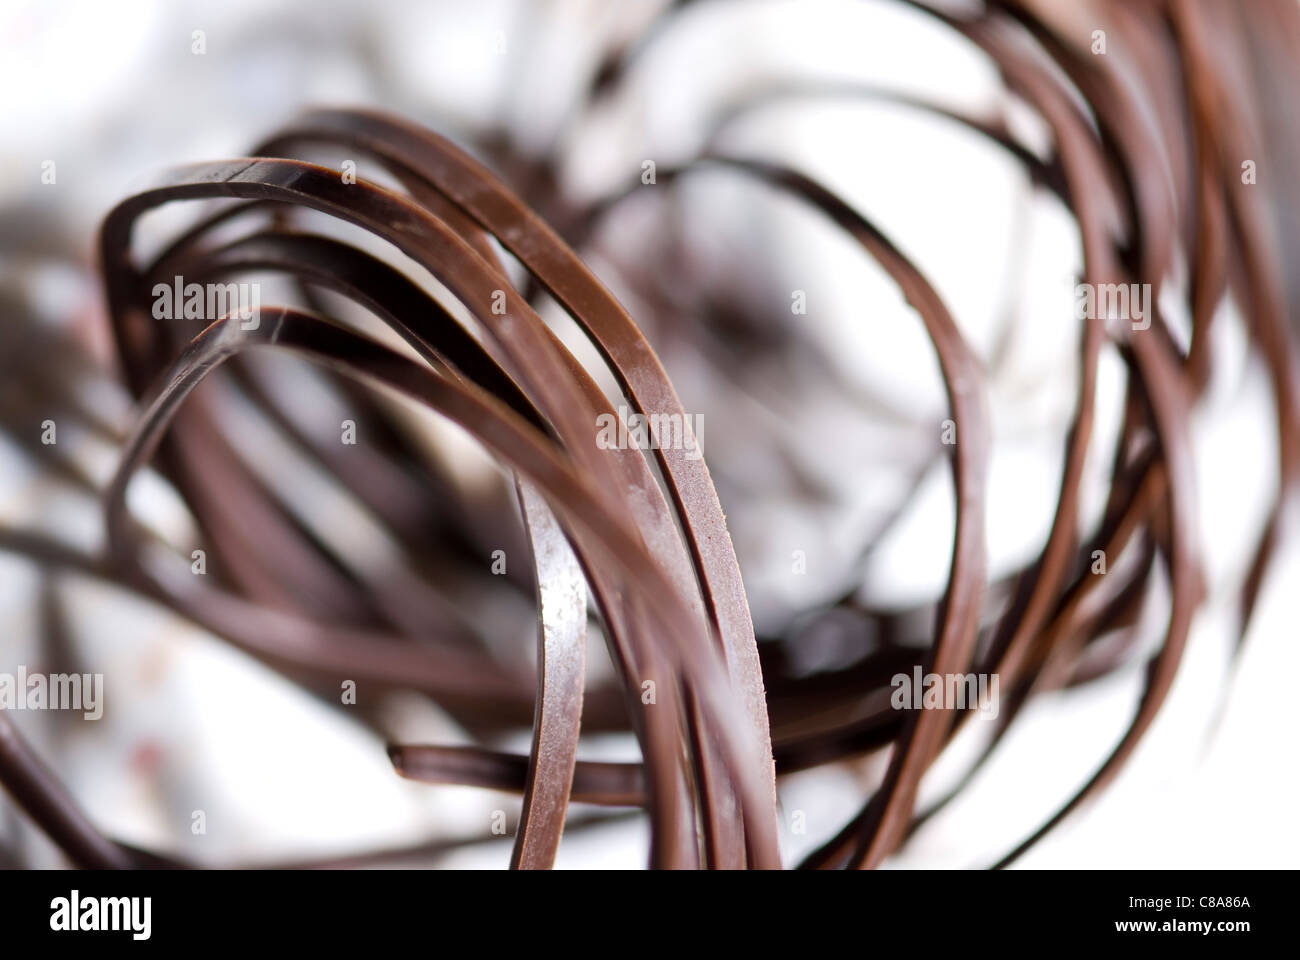 Dark chocolate coils Stock Photo